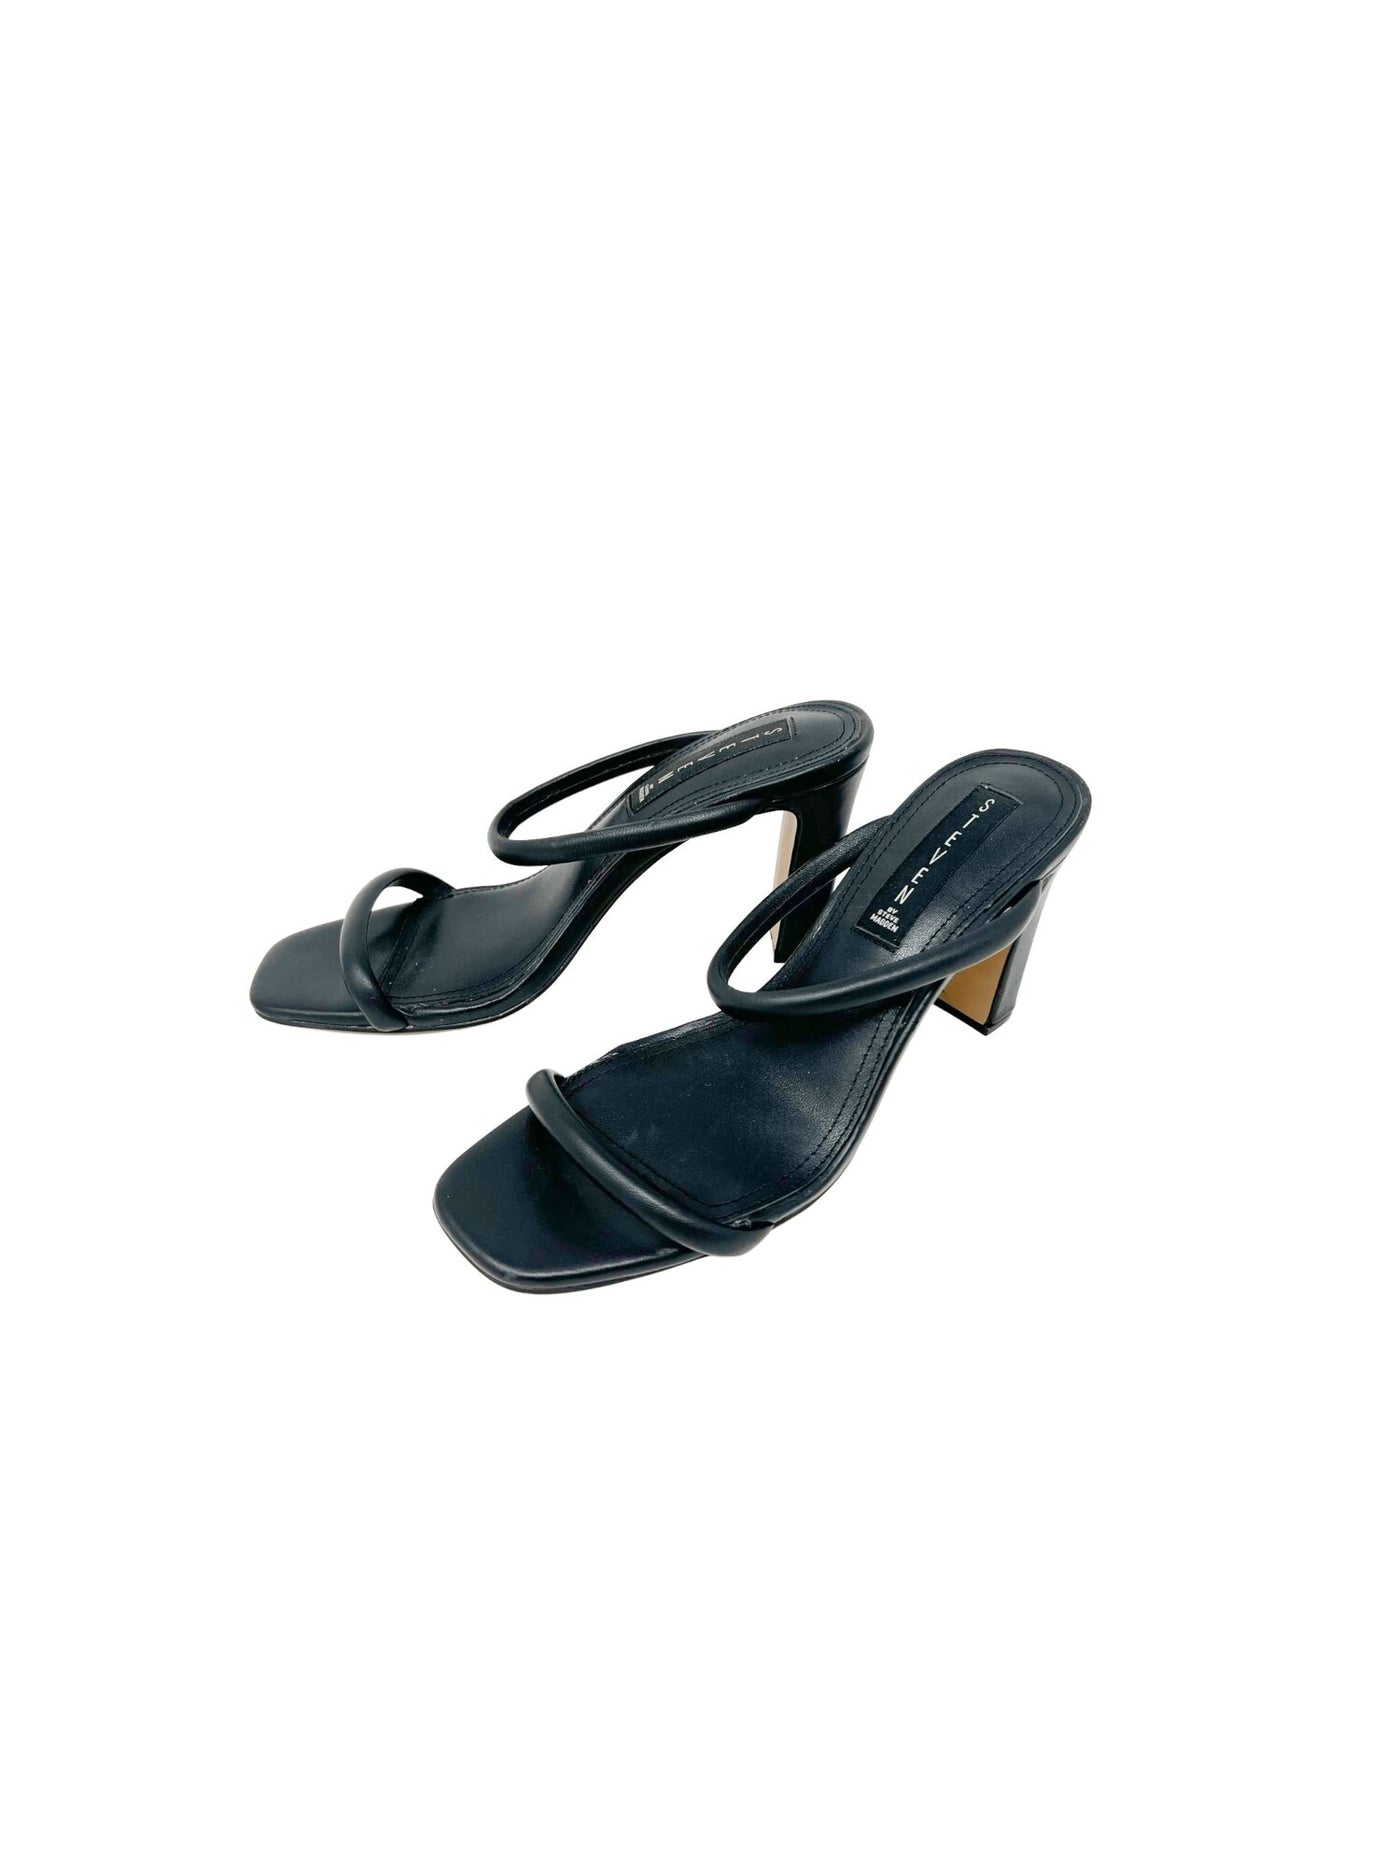 STEVEN Womens Black Comfort Padded Jersey By Steve Madden Square Toe Block Heel Slip On Leather Dress Sandals Shoes 7.5 M